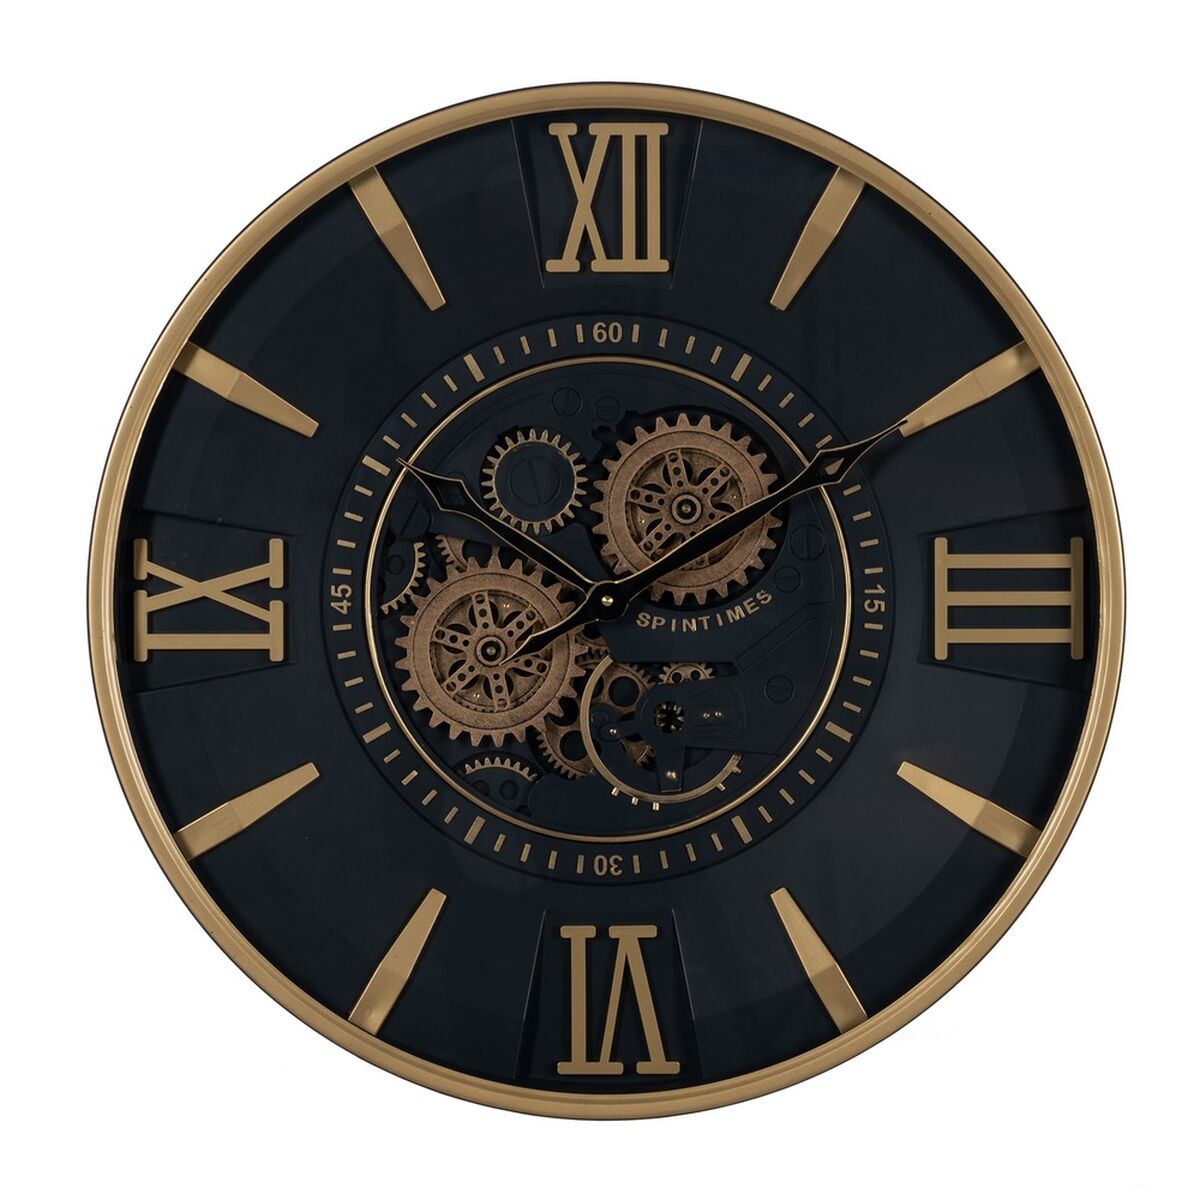 Стенен часовник Versa Сребрист Пластмаса Кварц 4,3 x 30 x 30 cm